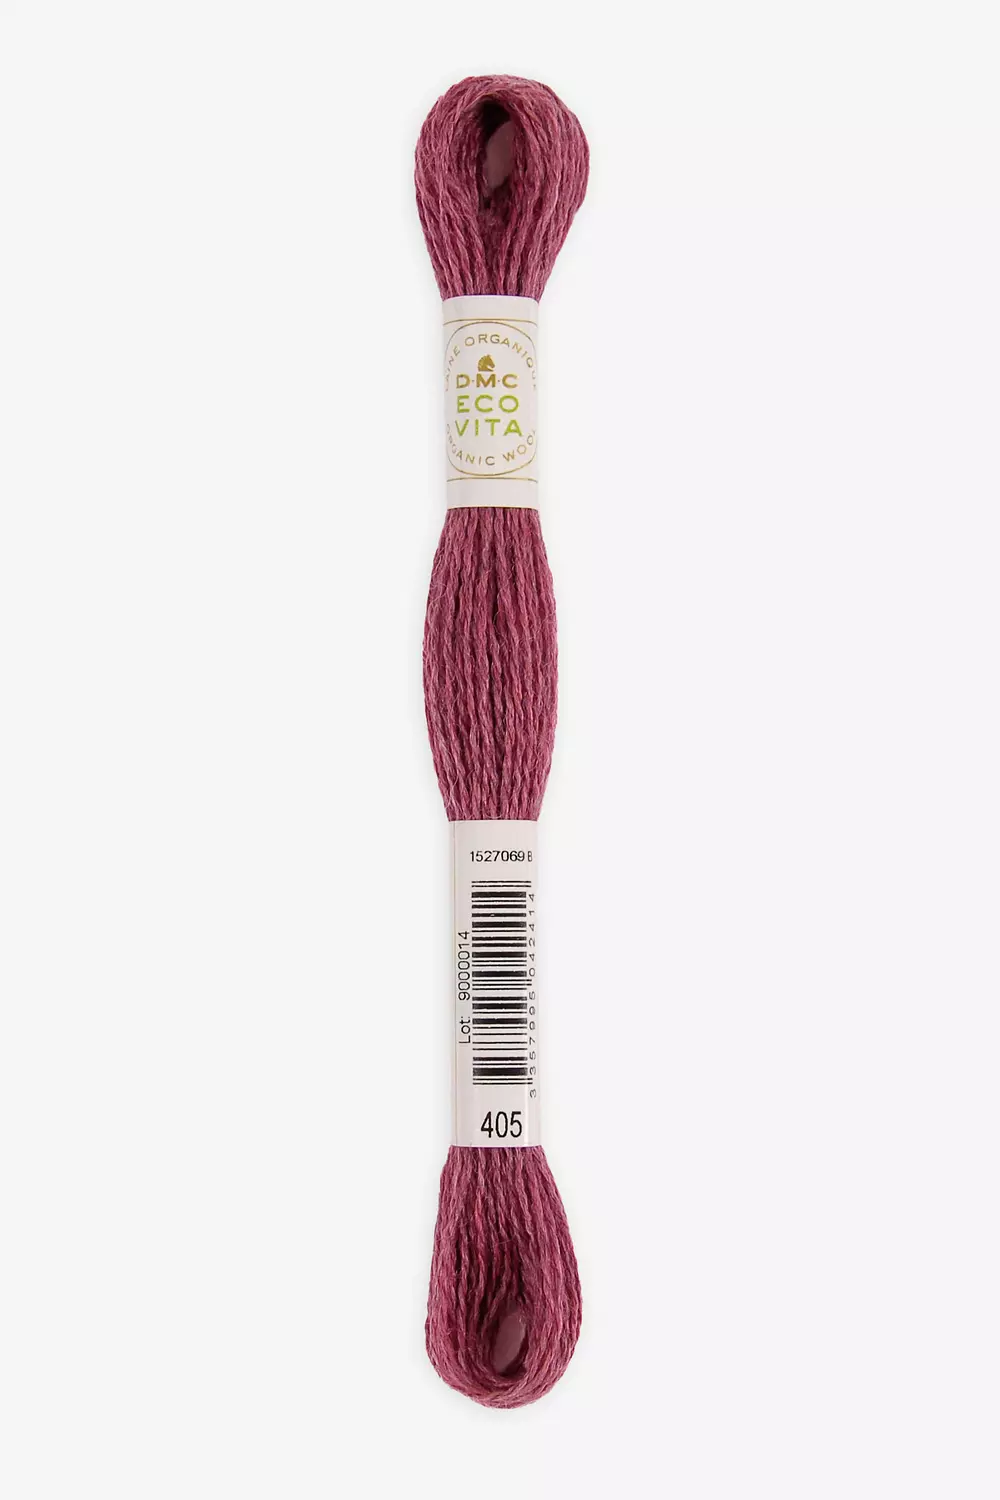 Eco Vita Naturally Dyed Organic Wool Thread - DMC